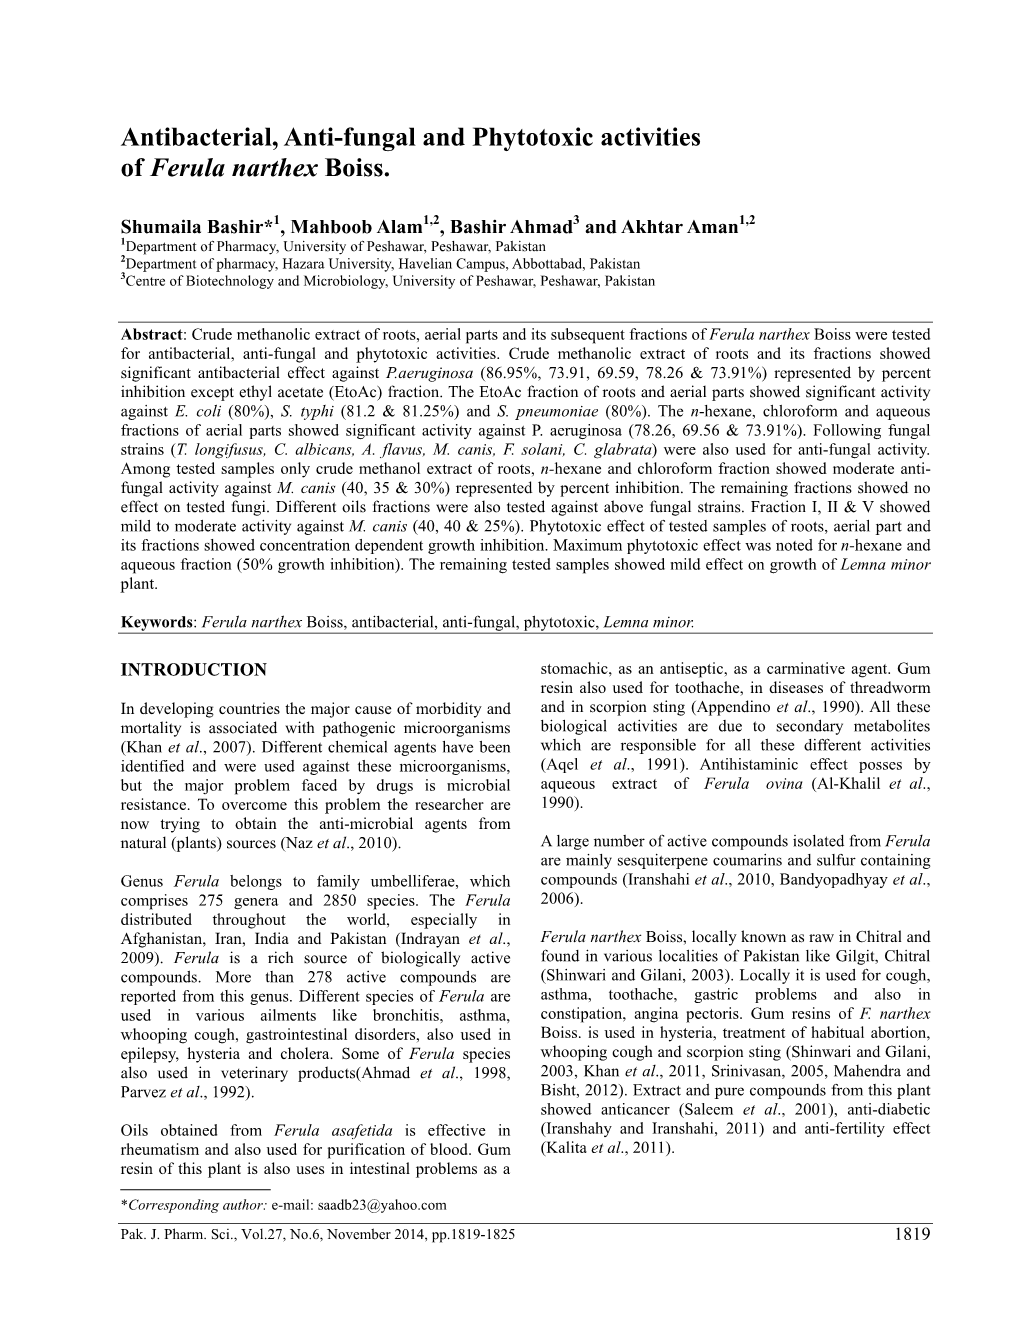 Antibacterial, Anti-Fungal and Phytotoxic Activities of Ferula Narthex Boiss